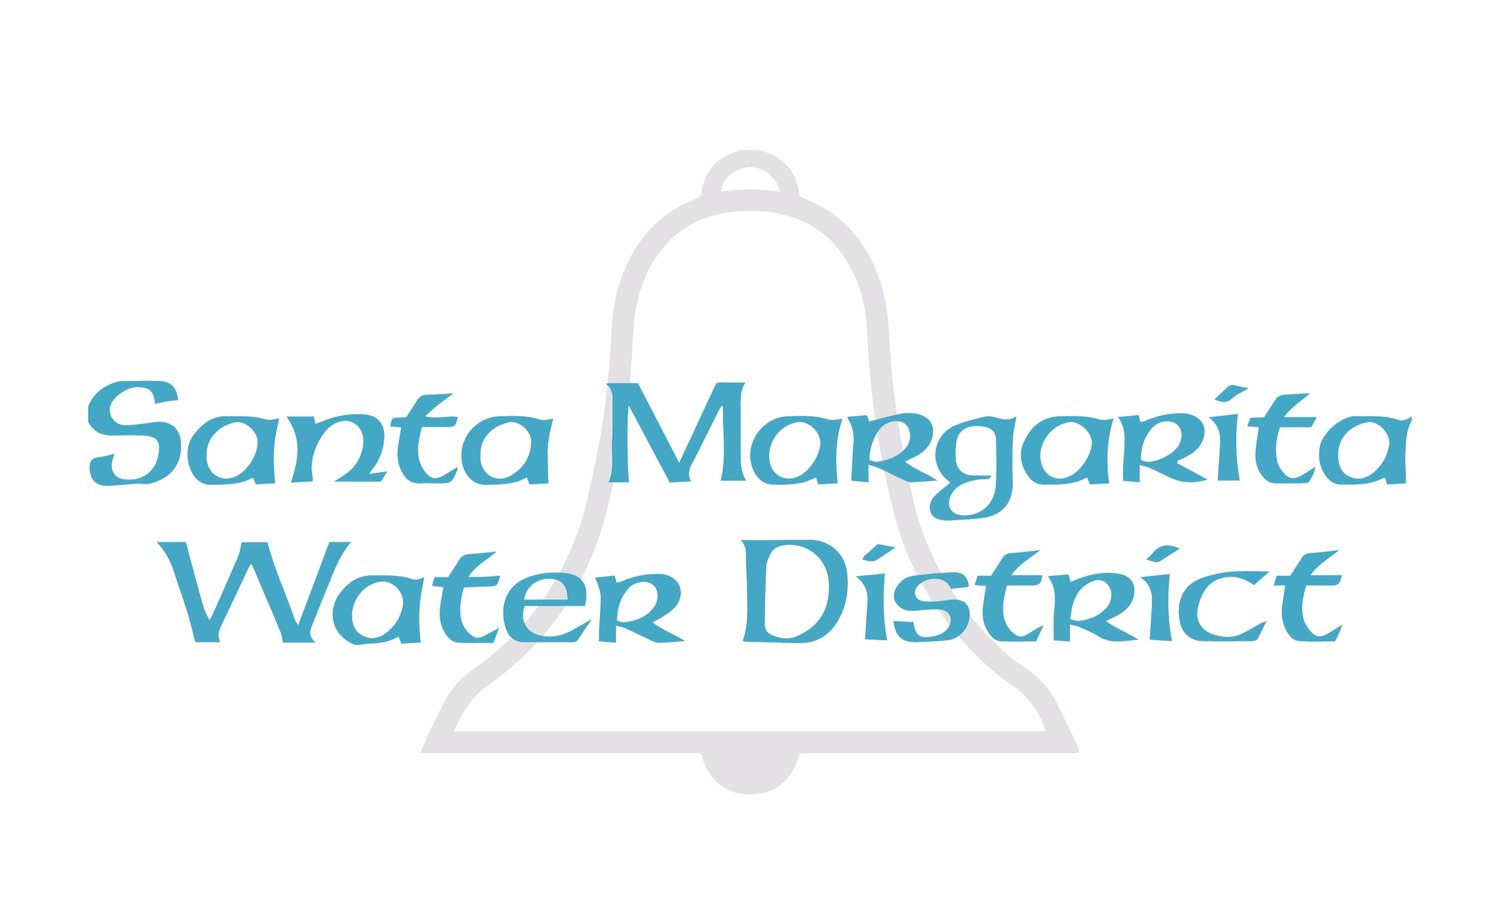 Santa Margarita Water District General Manager